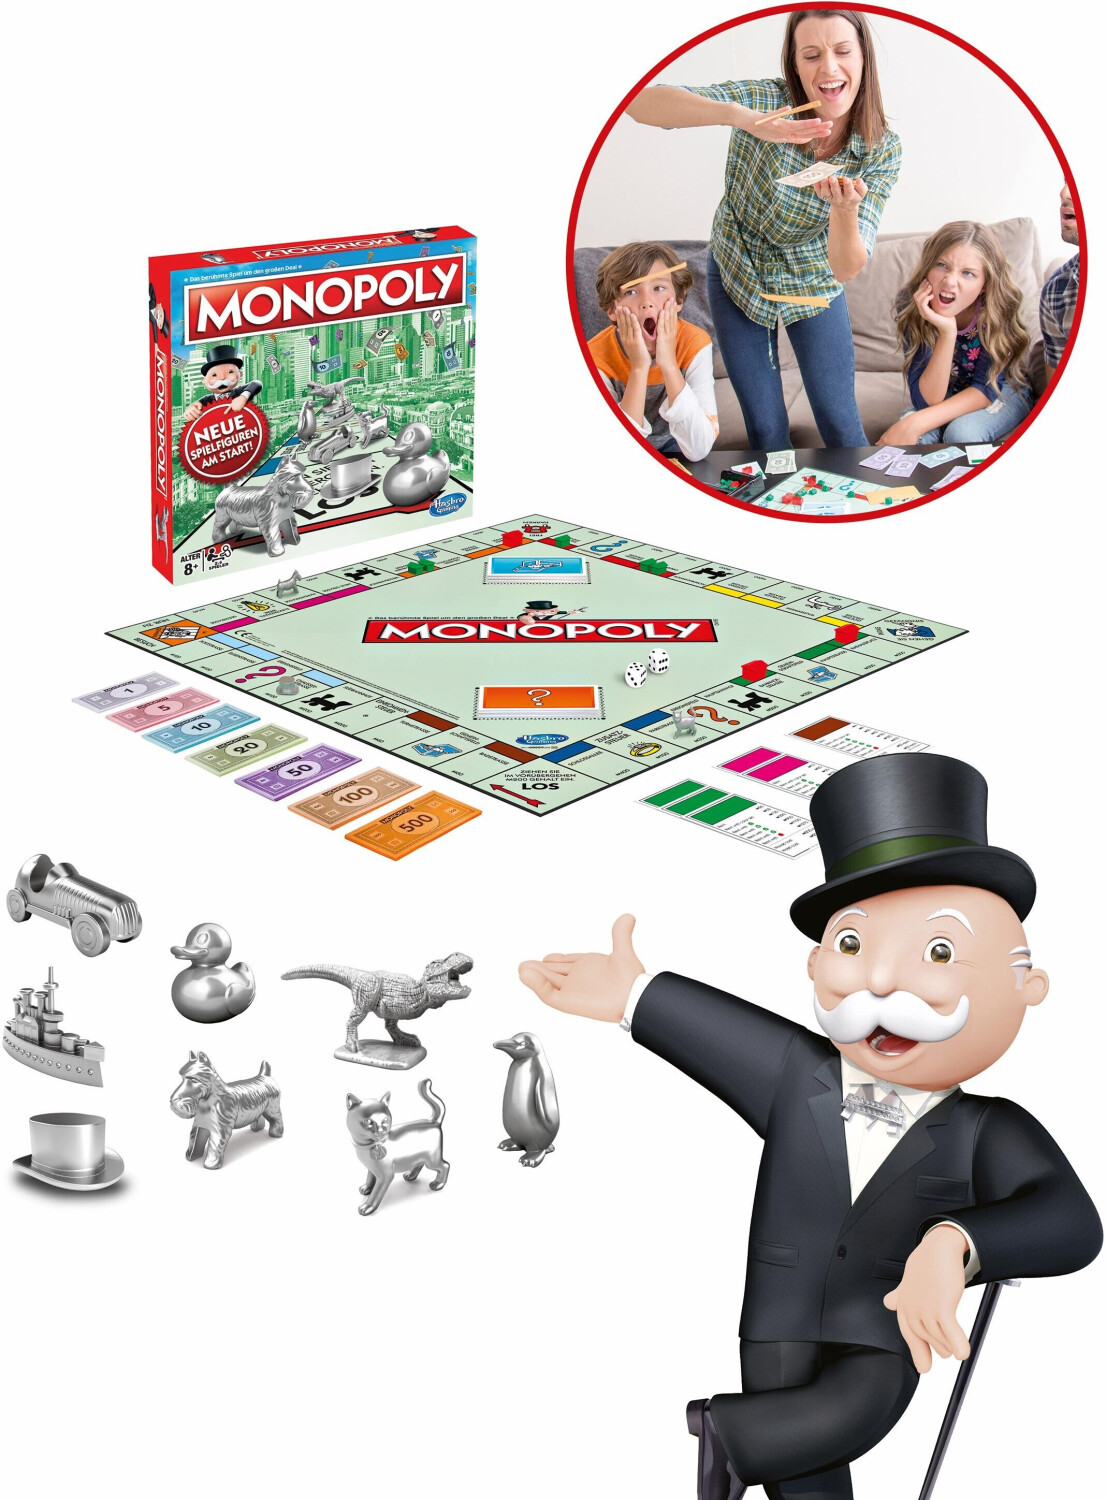 Monopoly Classic, Hasbro, Juego de Mesa